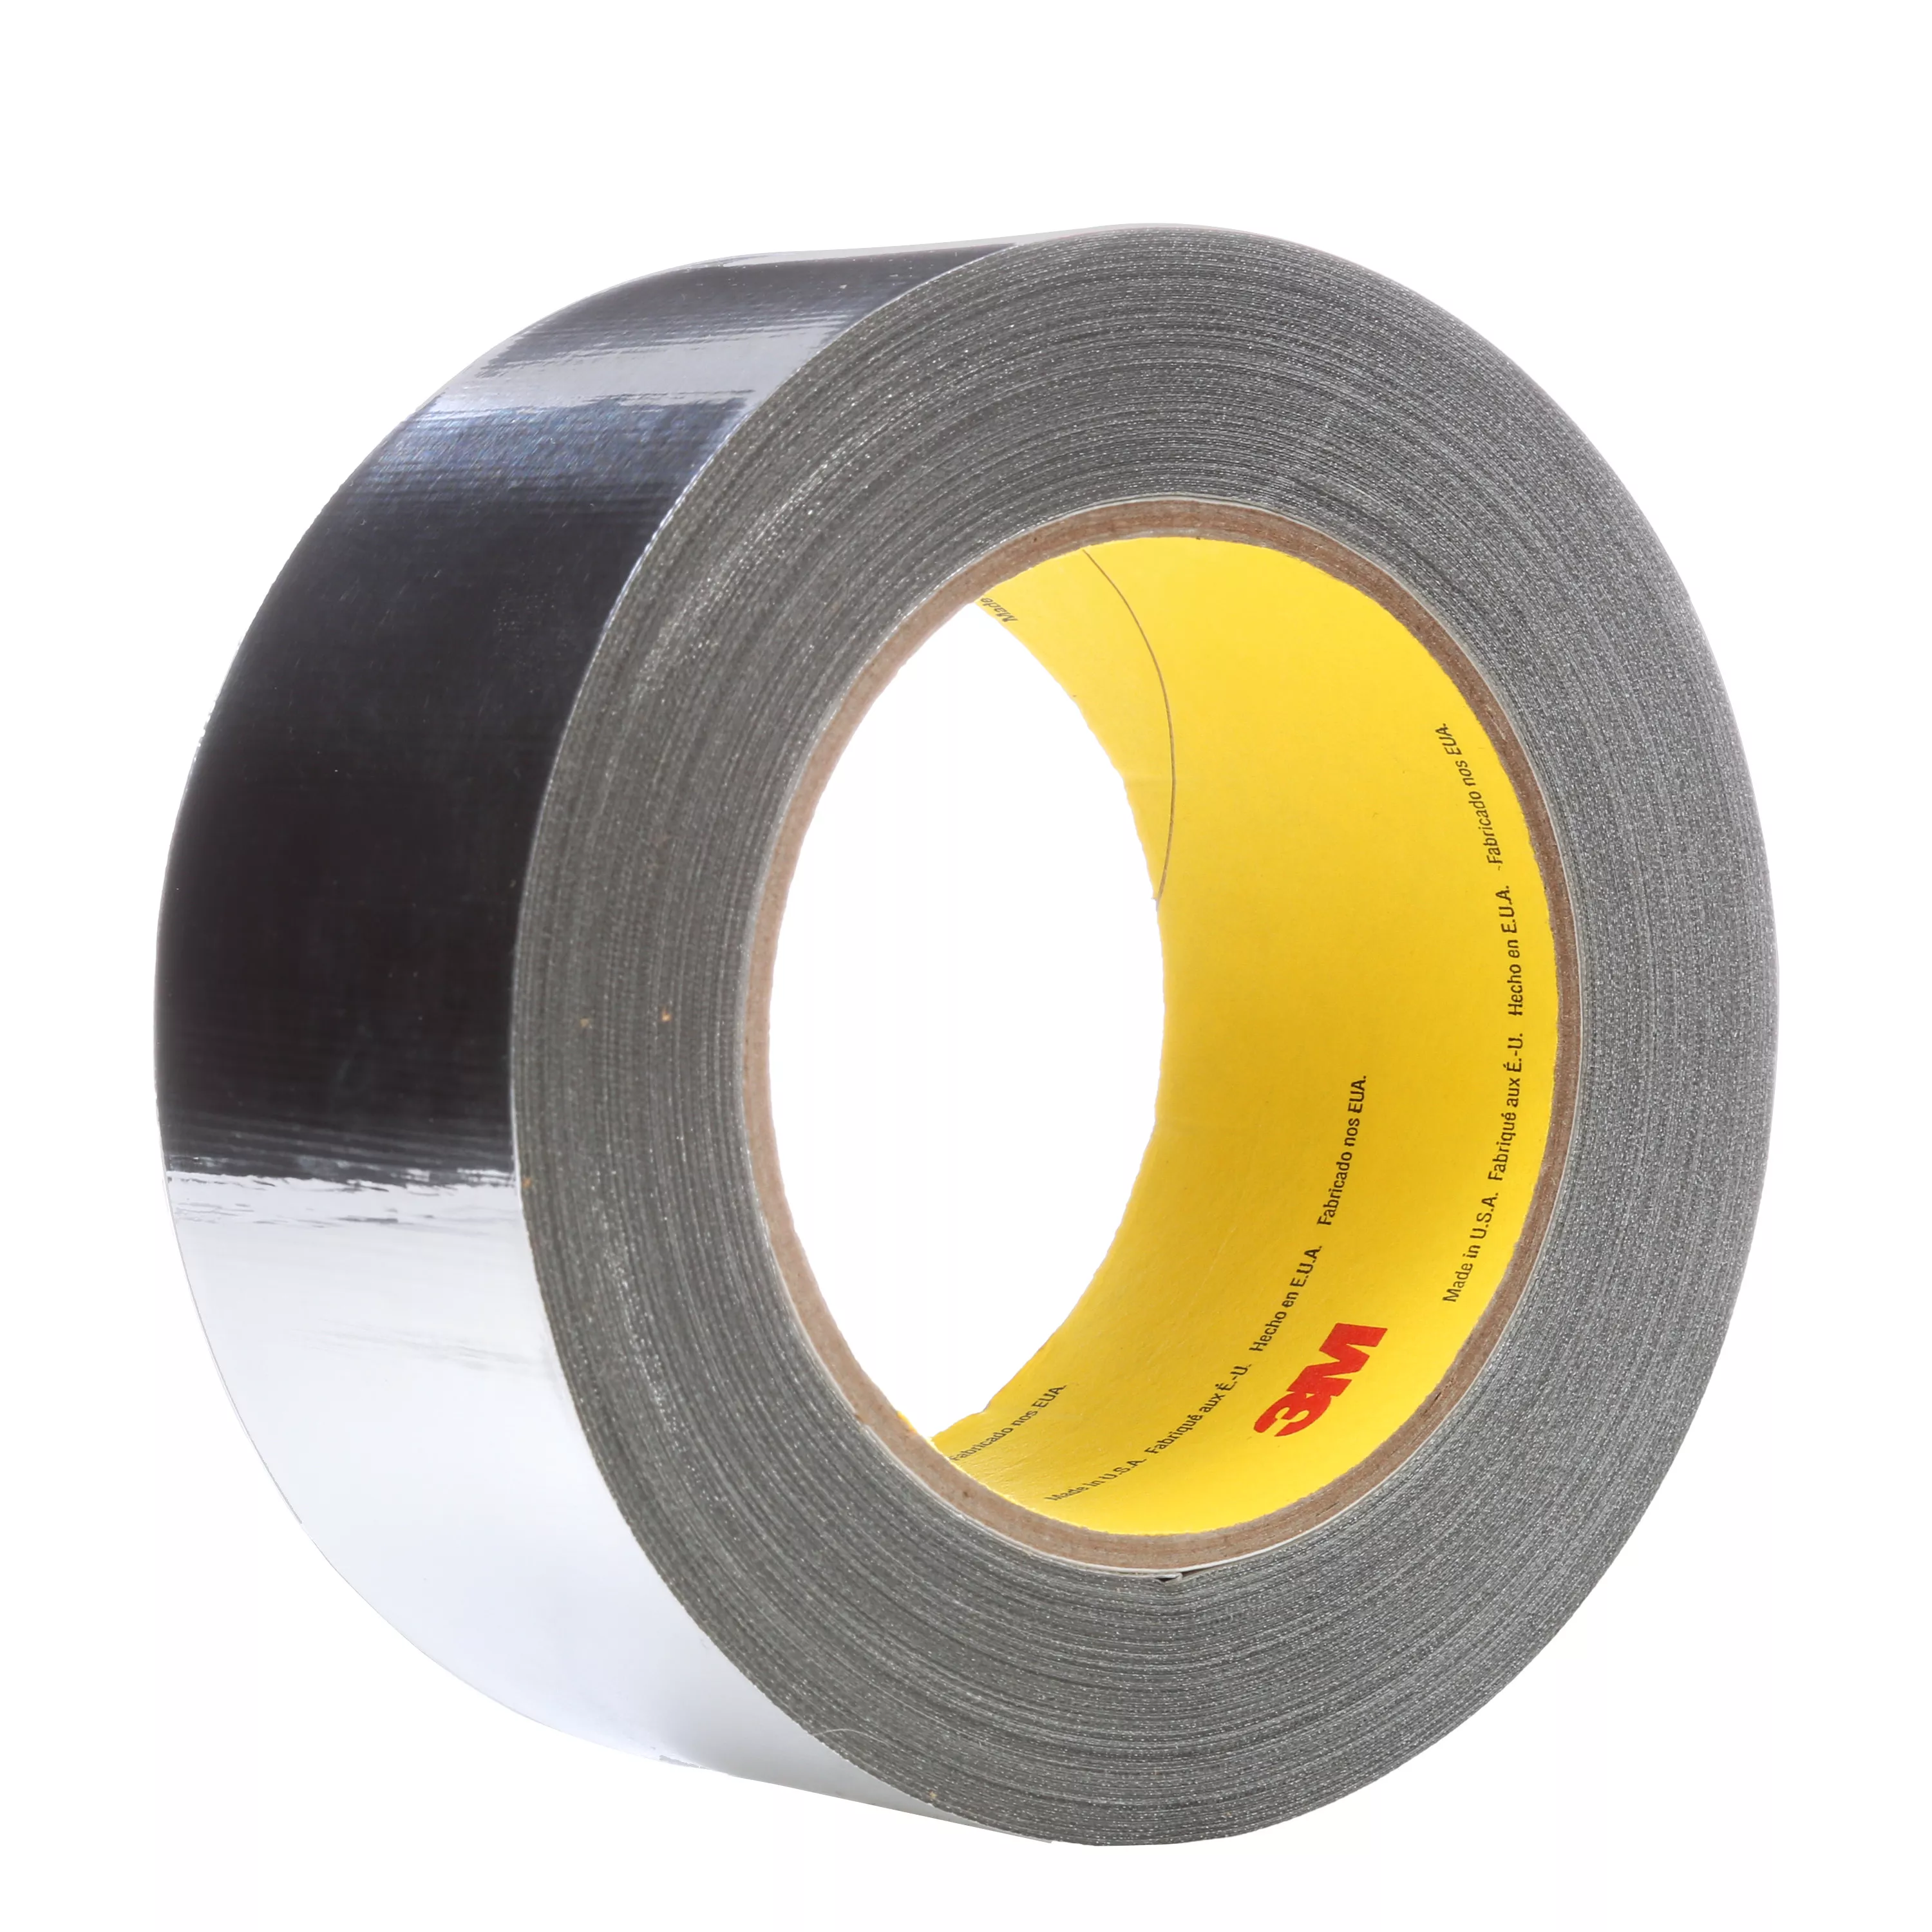 3M™ High Temperature Aluminum Foil Glass Cloth Tape 363, Silver, 2 in x
36 yd, 7.3 mil, 24 Roll/Case